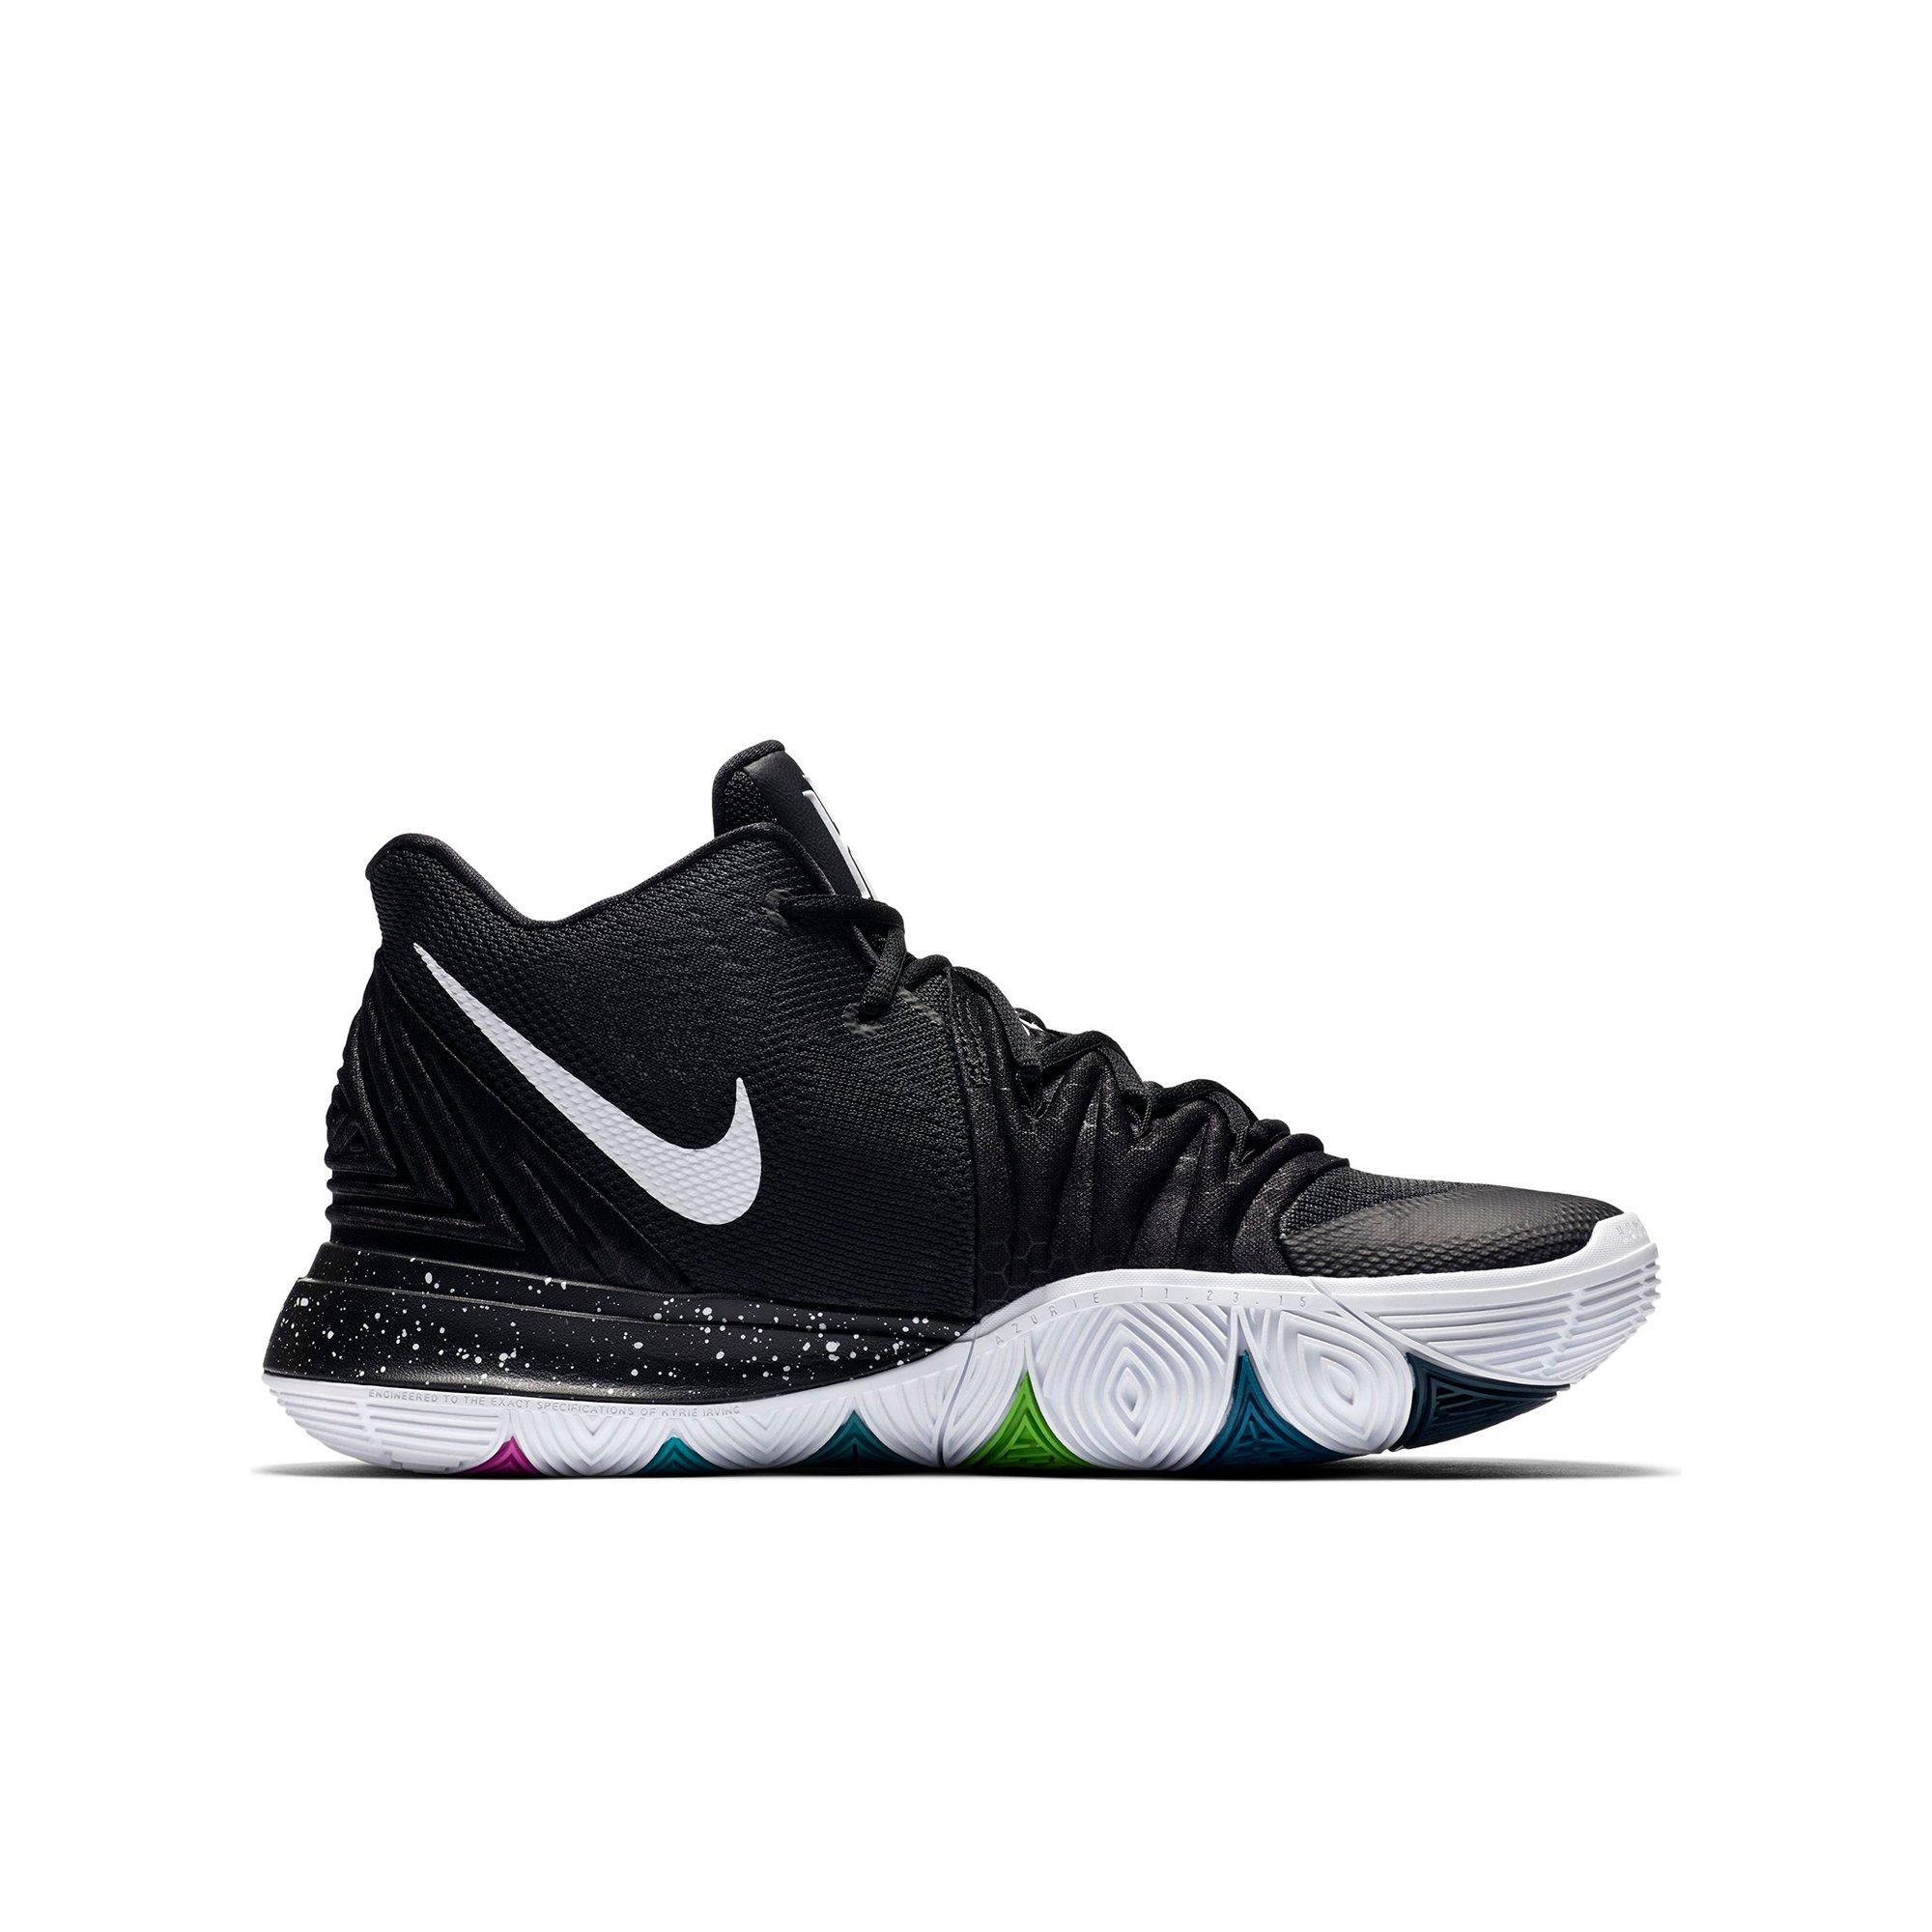 Nike KYRIE 5 EP Basketball shoes For Men Black Shopee